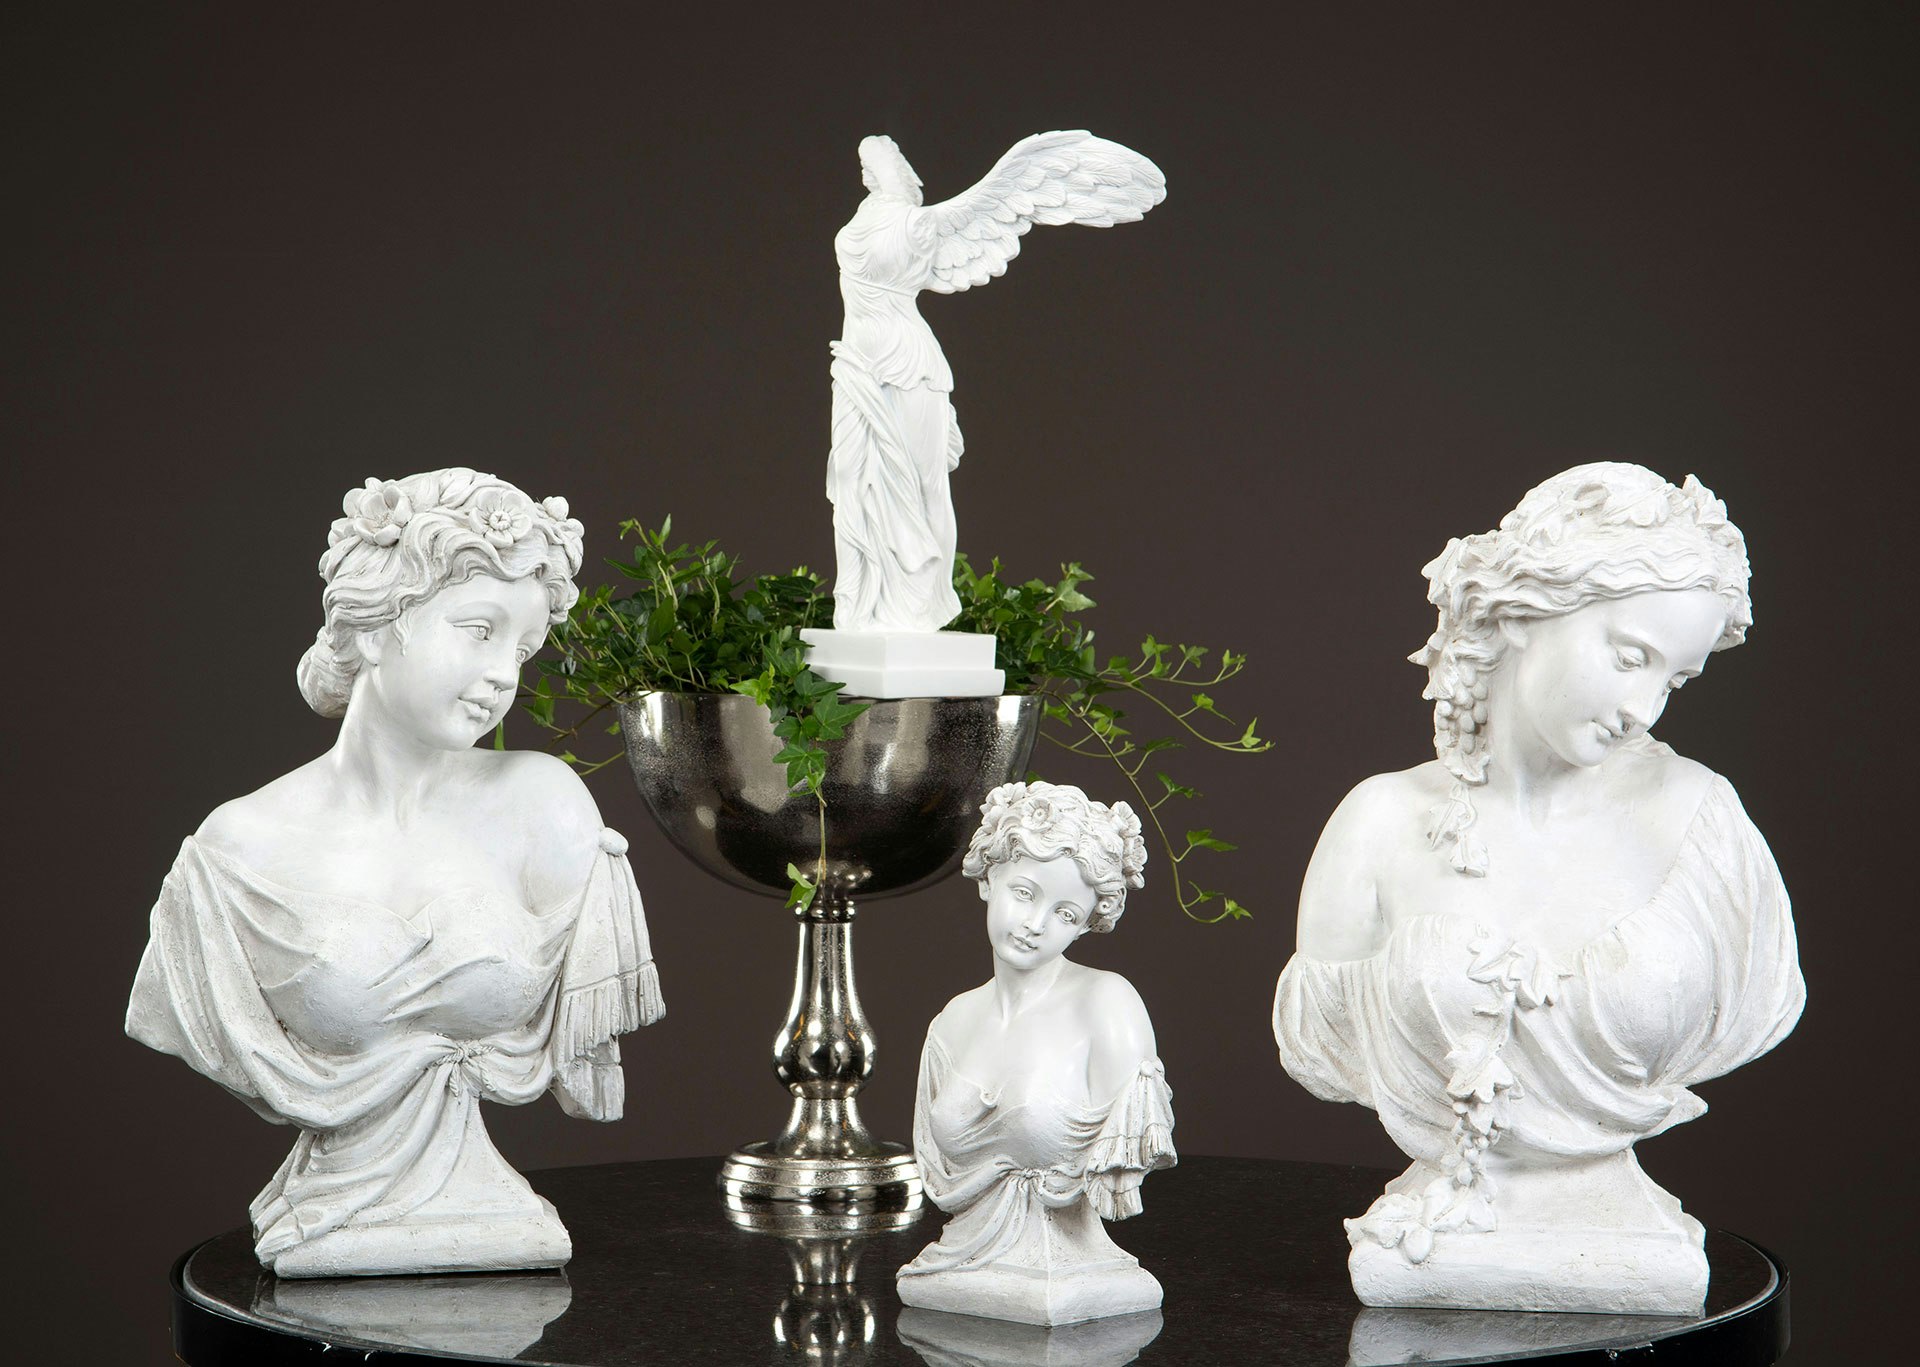 Byst Mary, Skulptur, Heminredning, Polystone figur, Ängel skulptur,